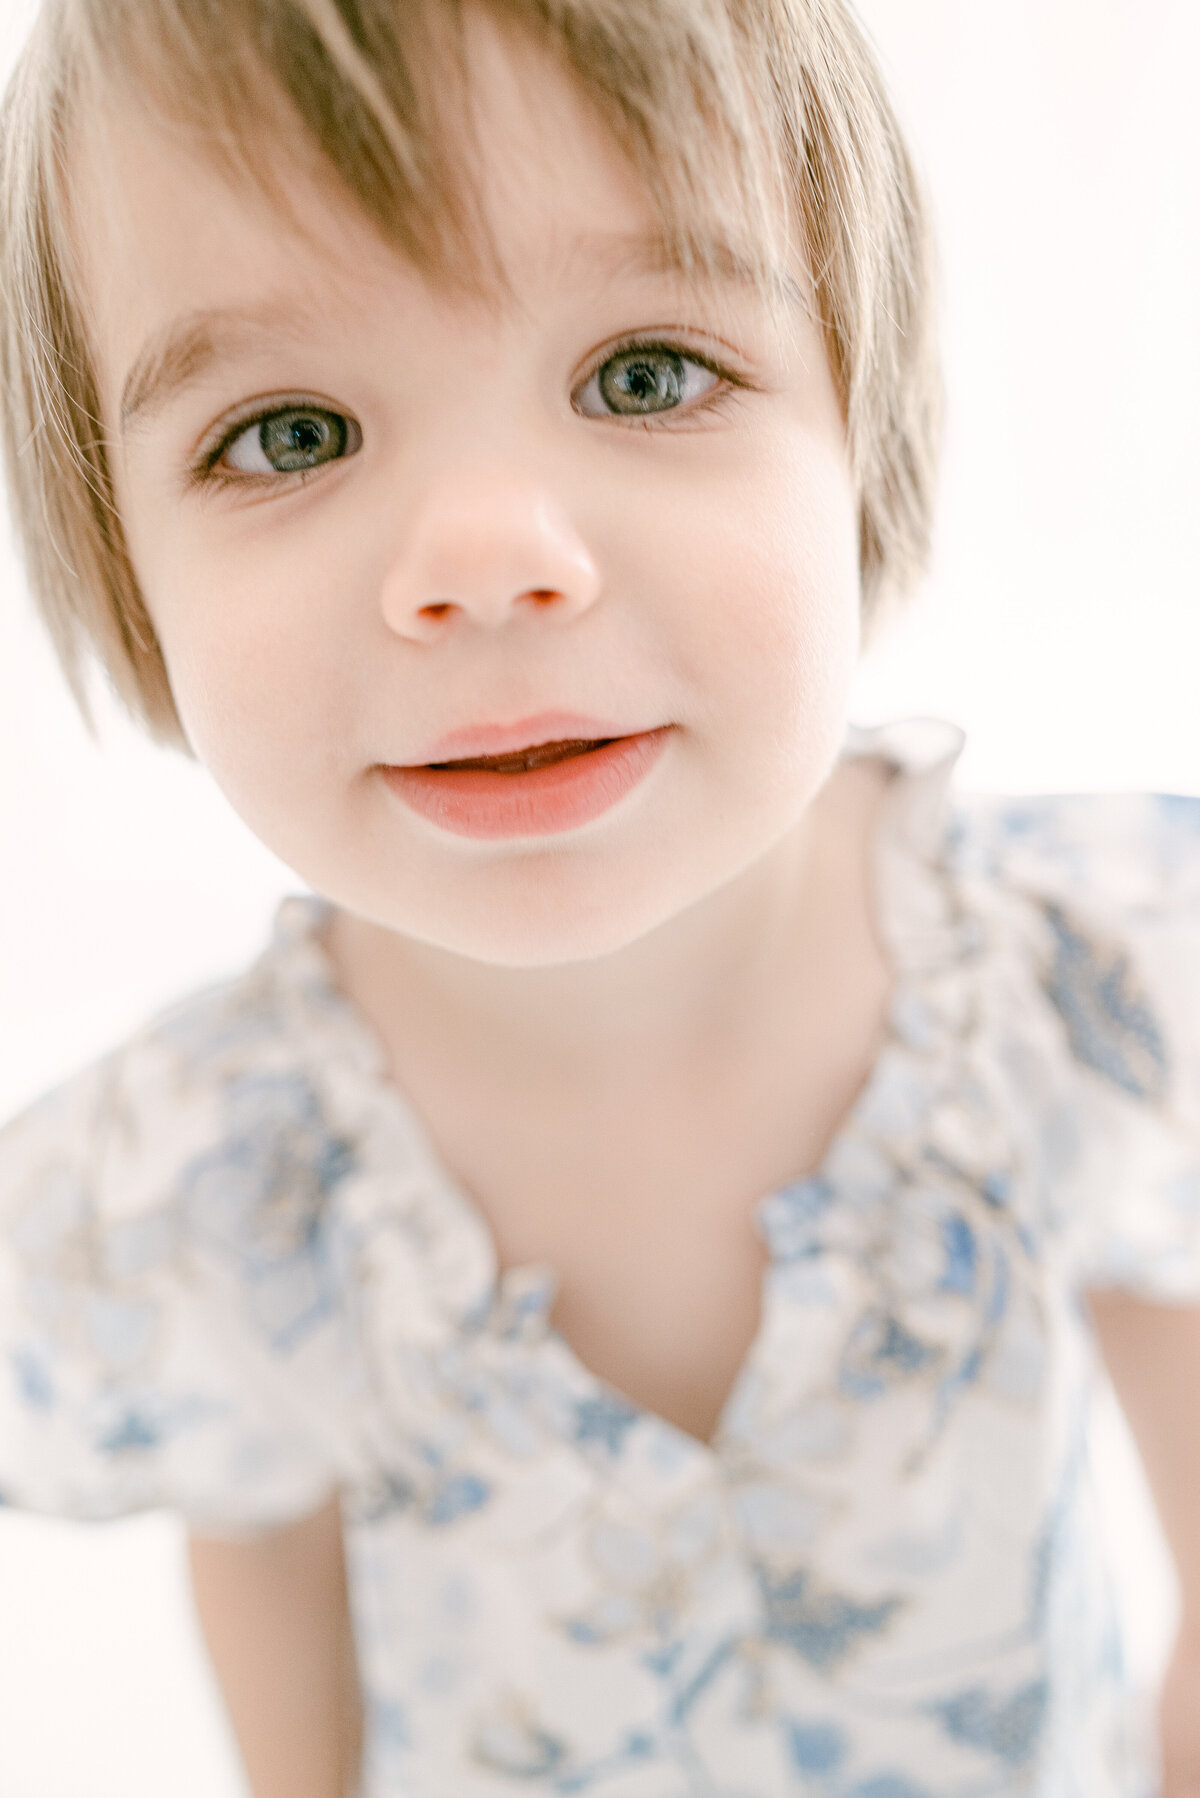 Toddler looking at the camera blue eyes